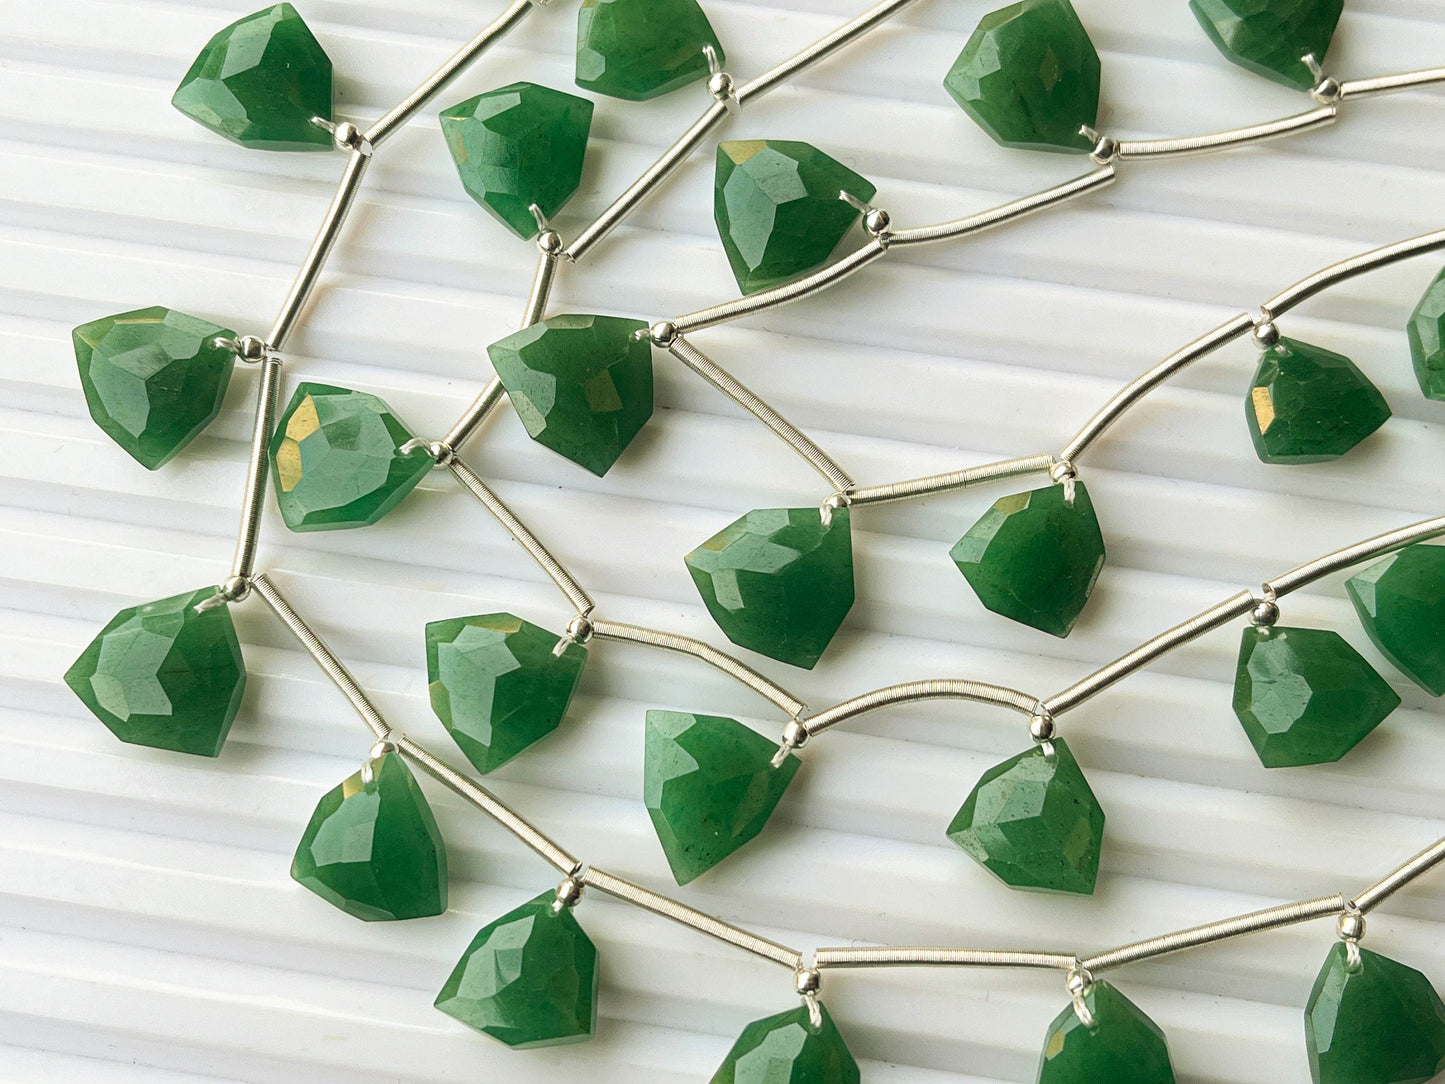 Green Jade Trillion shape faceted briolette beads